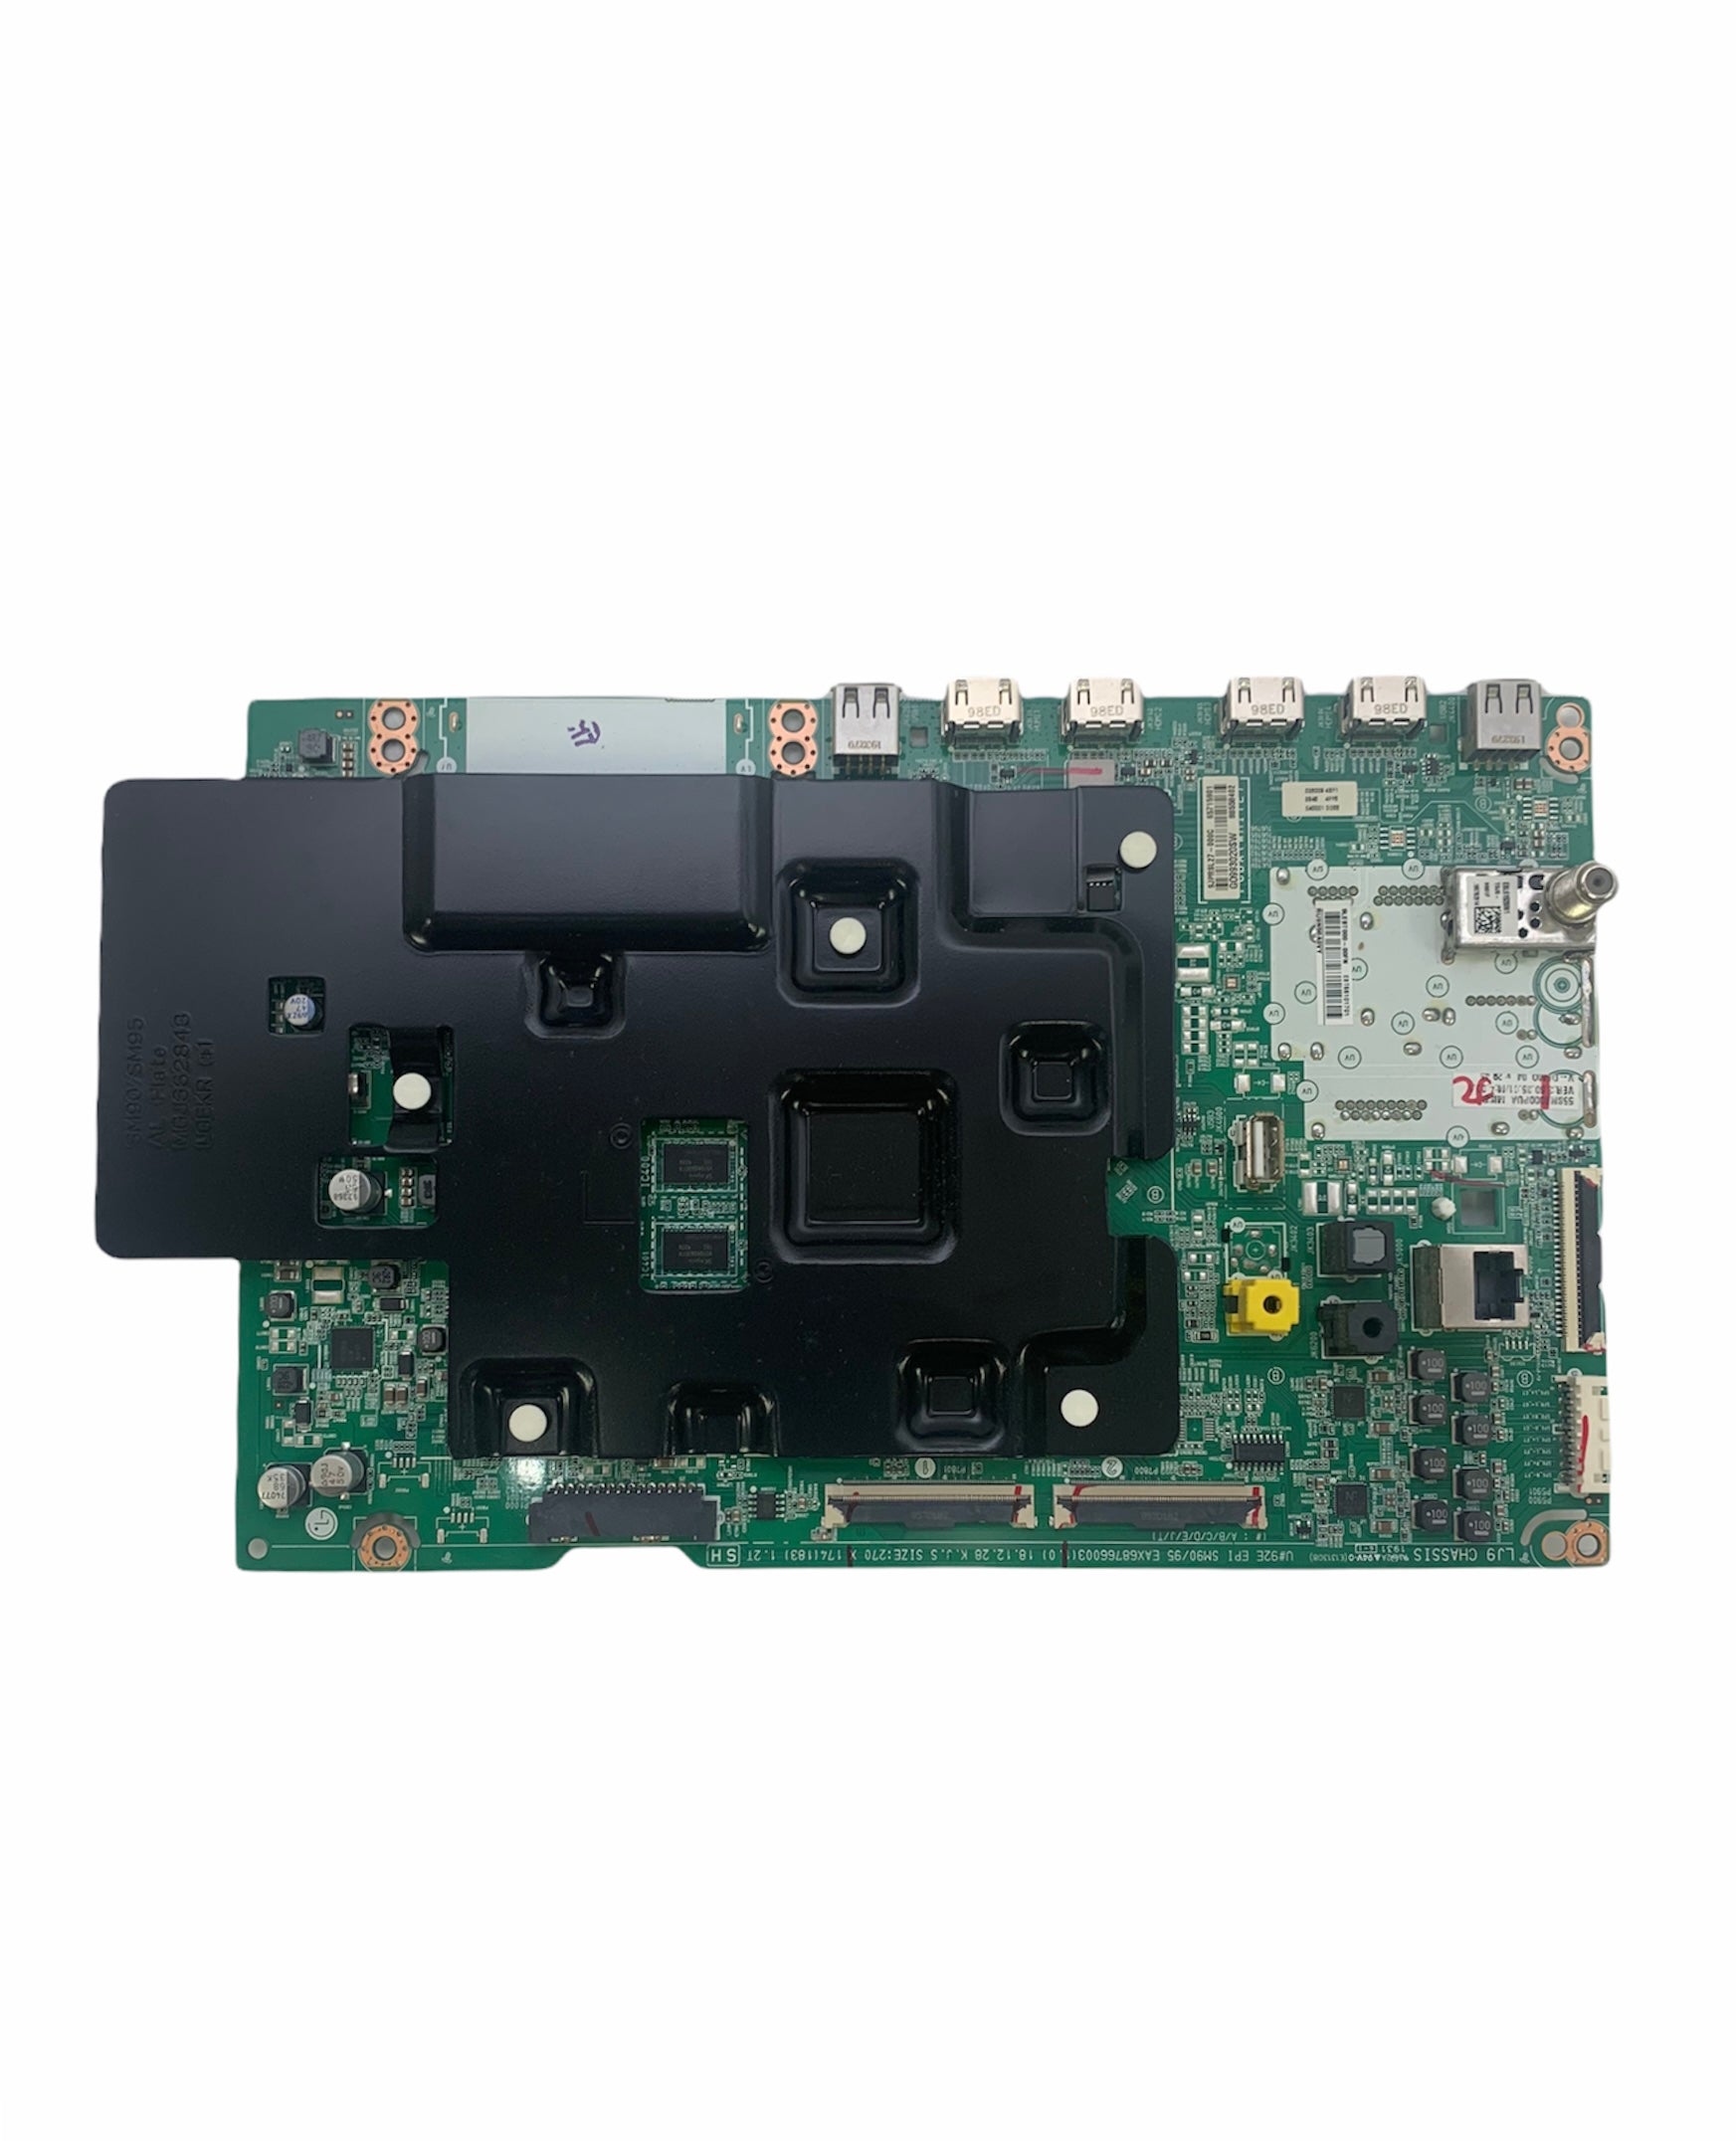 LG EBT66101701 Main Board for 55M9000PUA